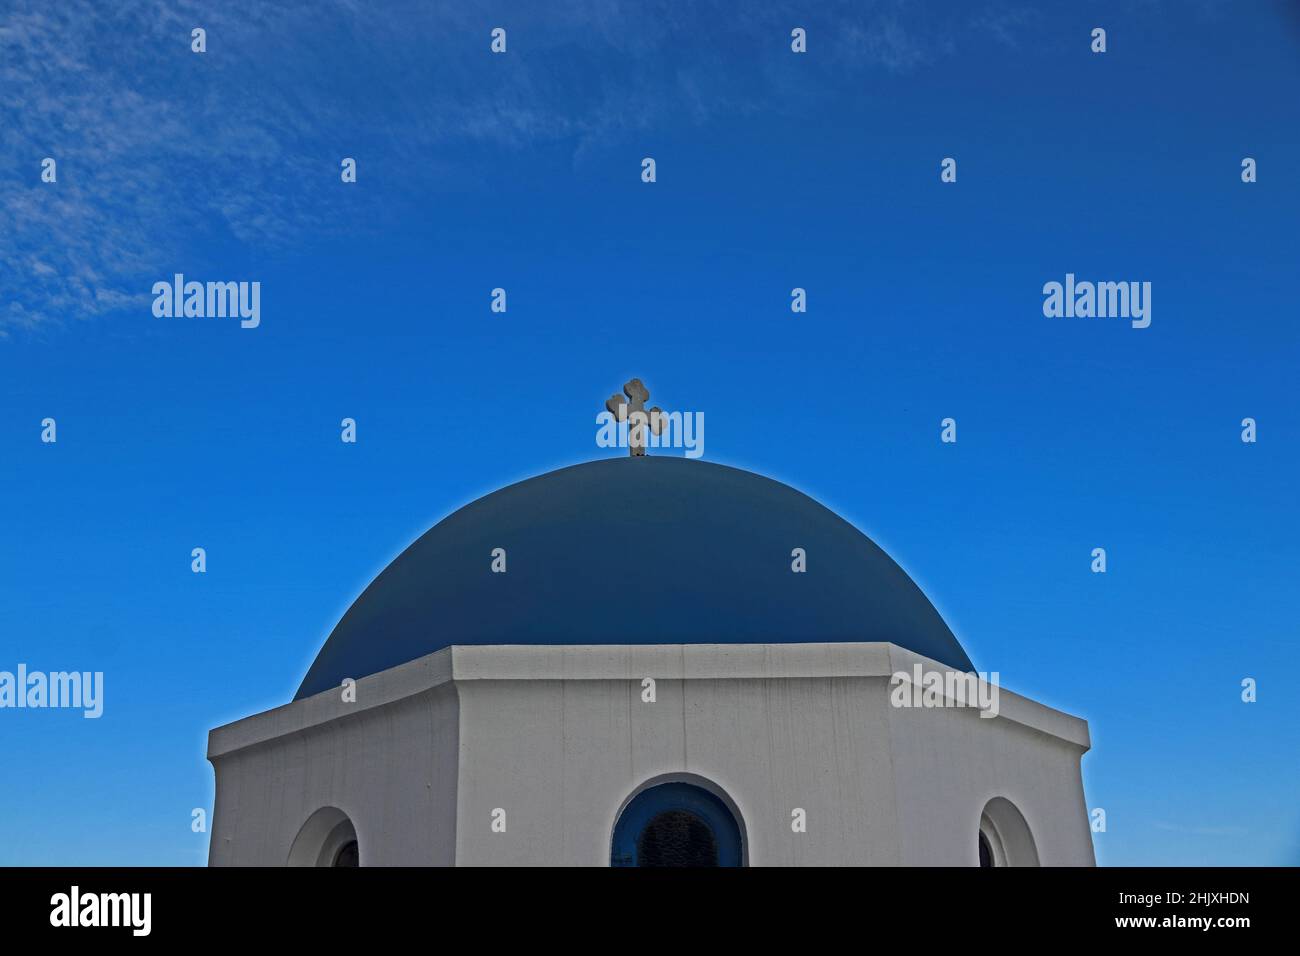 Blue dome with white cross against blue sky, Santorini, Greece Stock Photo